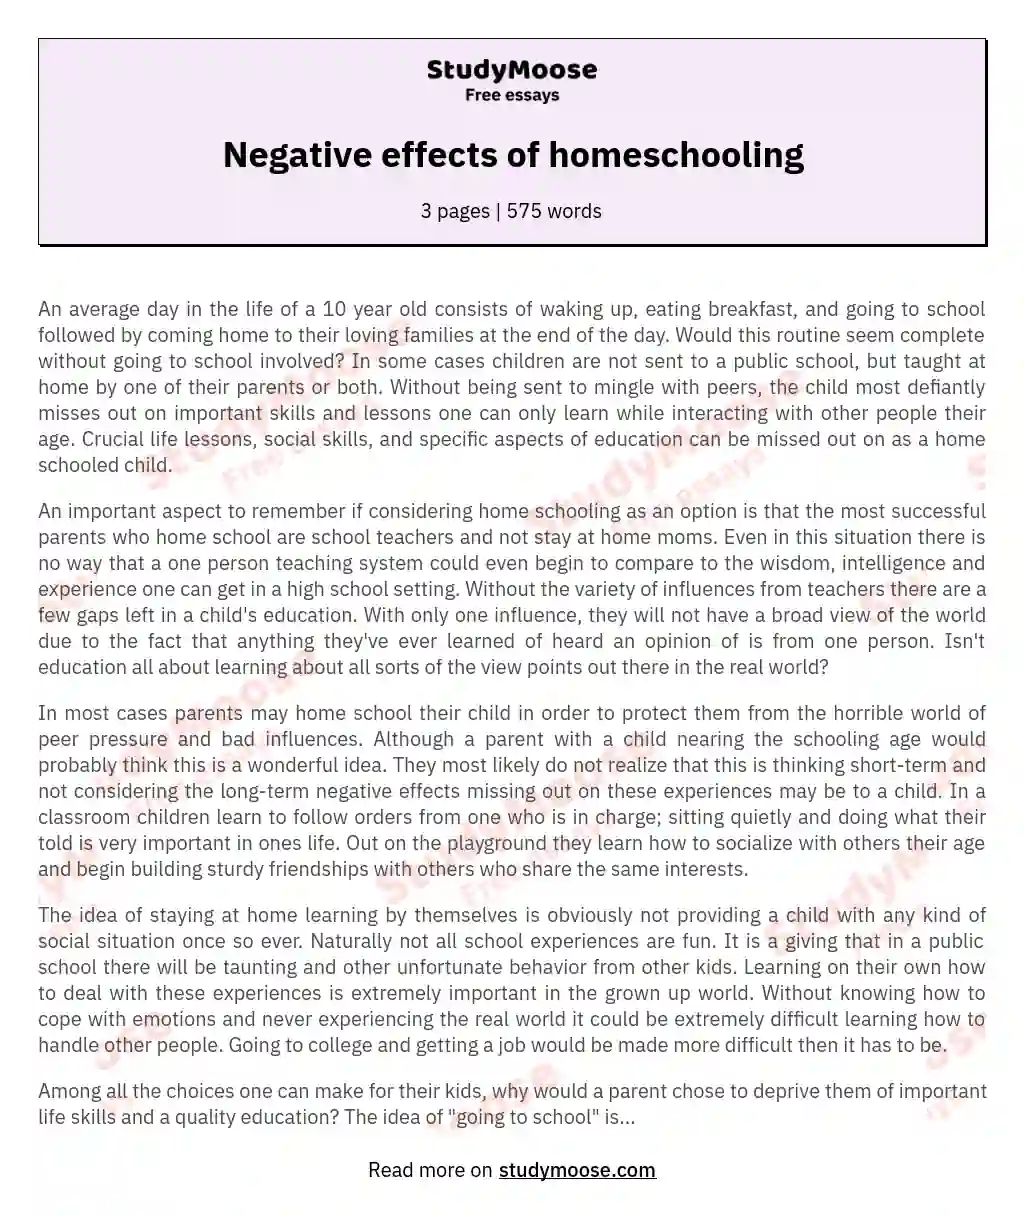 Negative effects of homeschooling essay